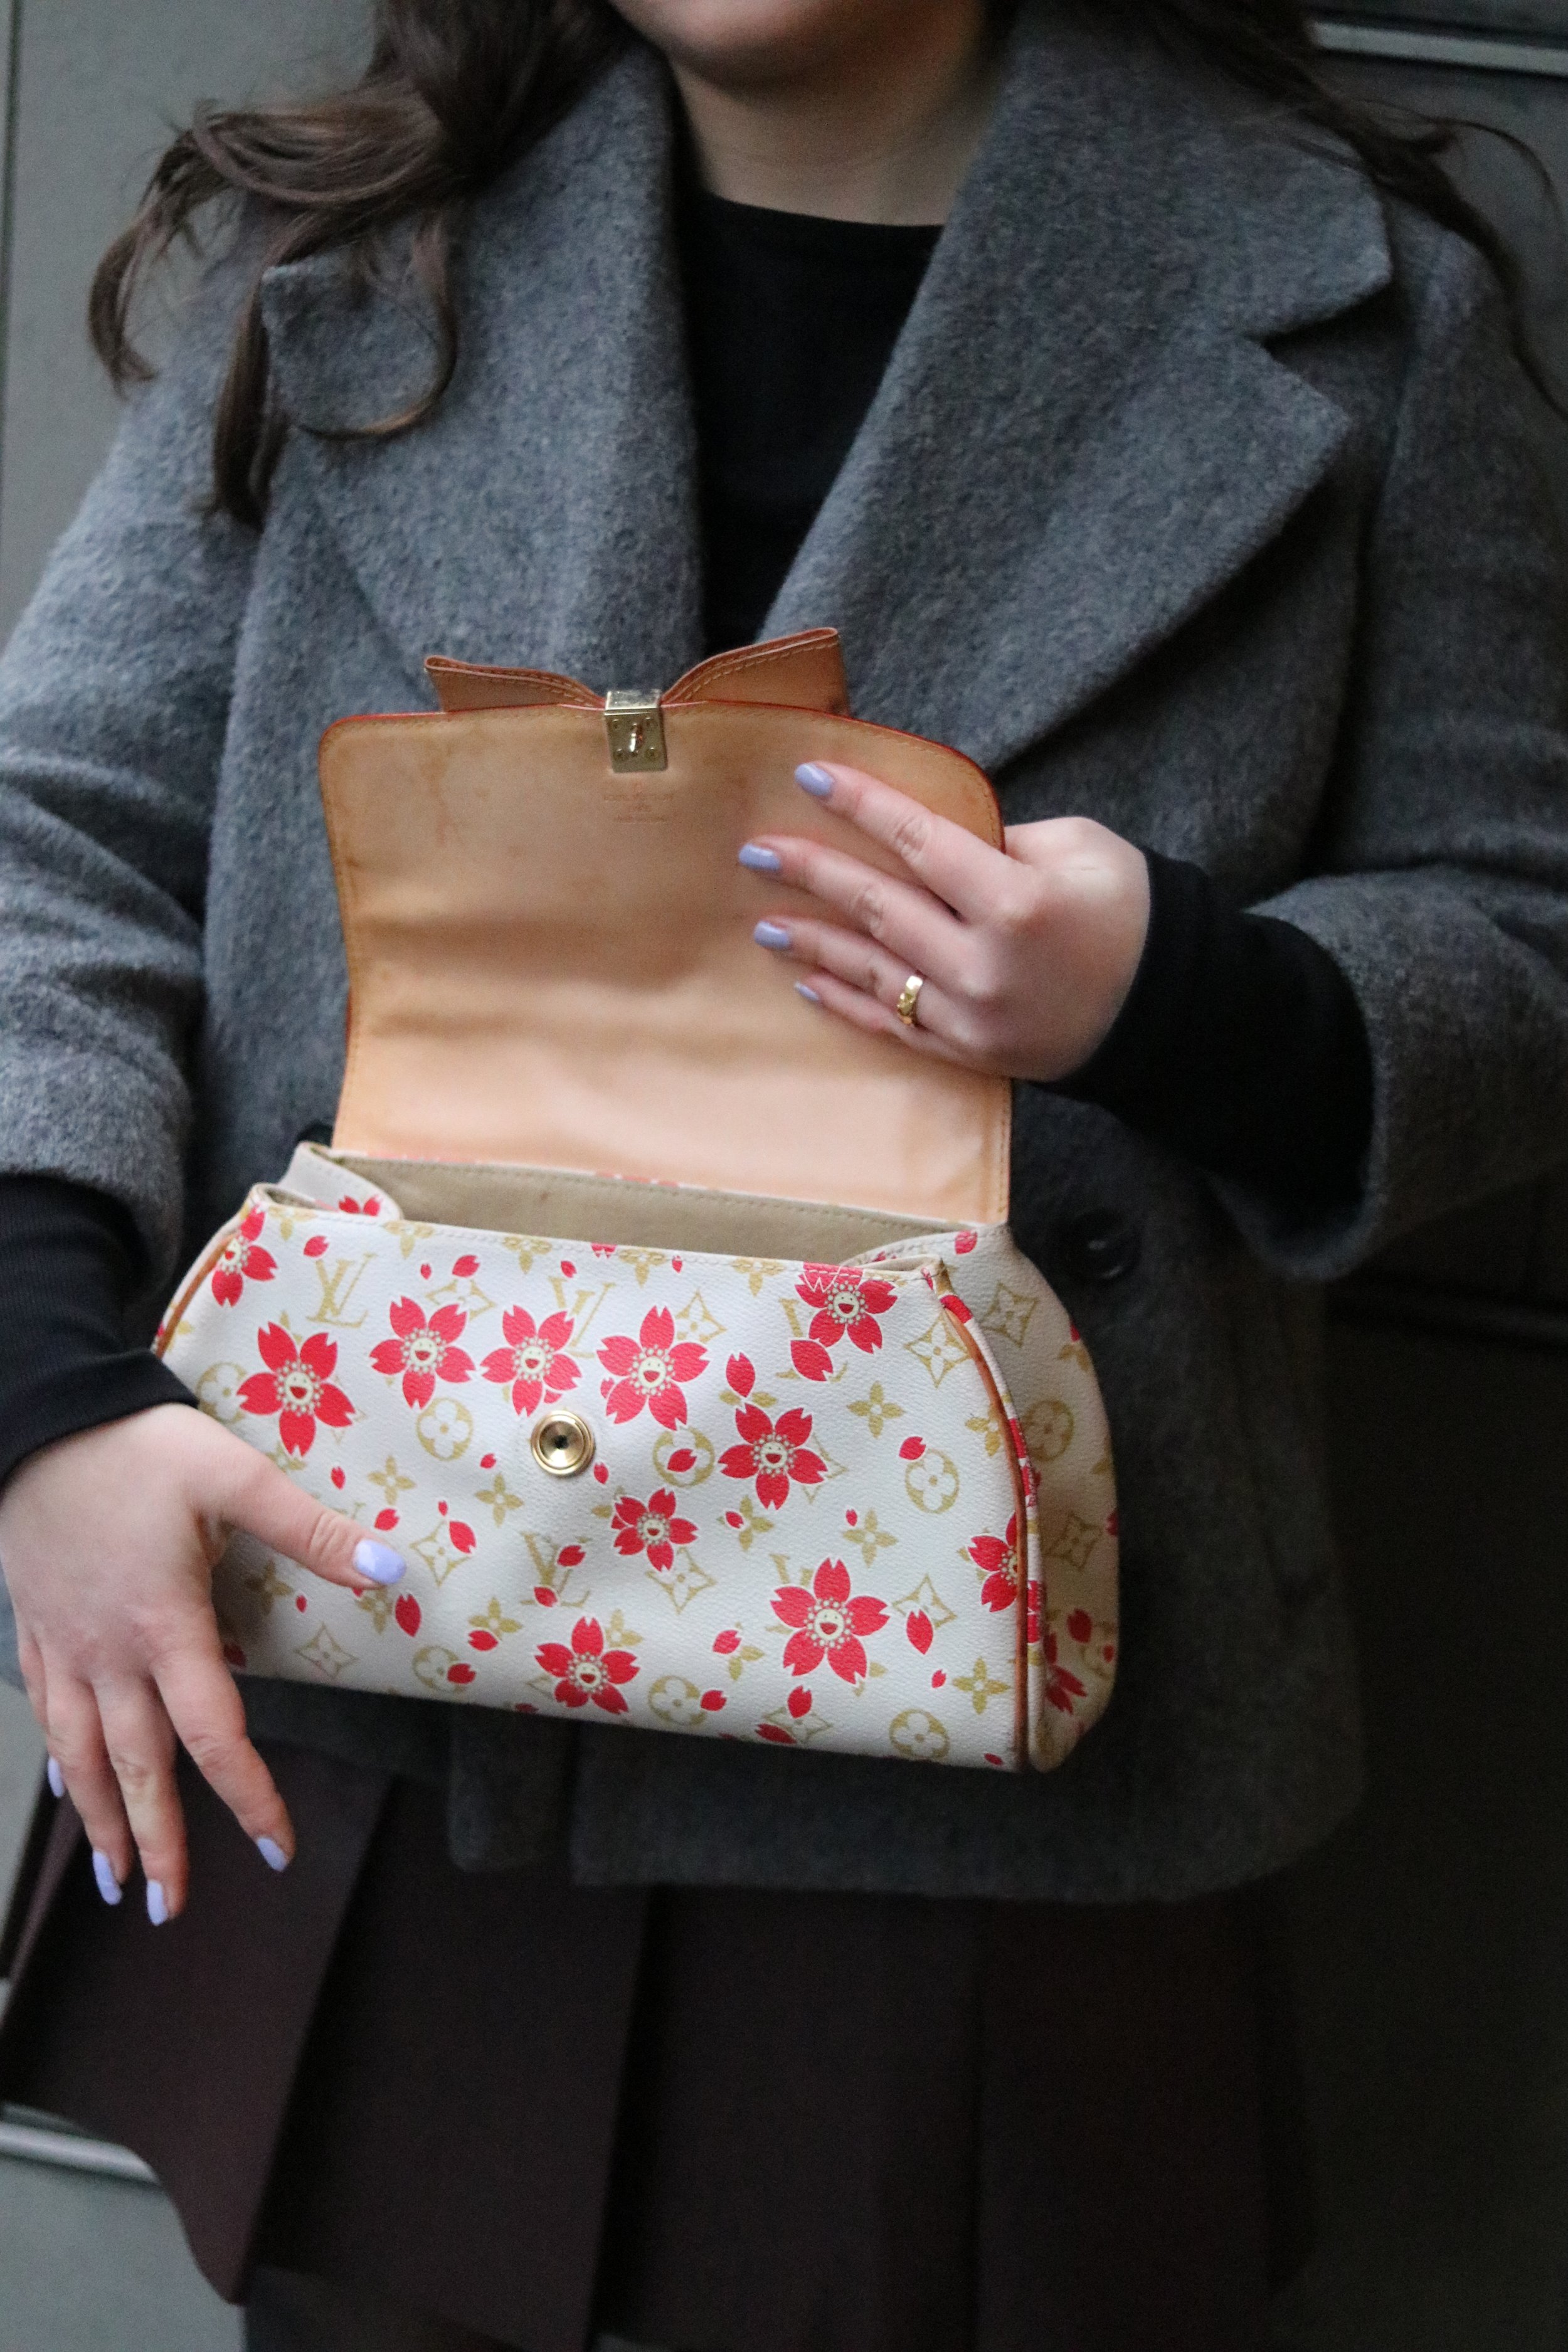 Louis Vuitton x Takashi Murakami Vintage Monogram Cherry Blossom Sac Retro  - Pink Handle Bags, Handbags - LOU801967